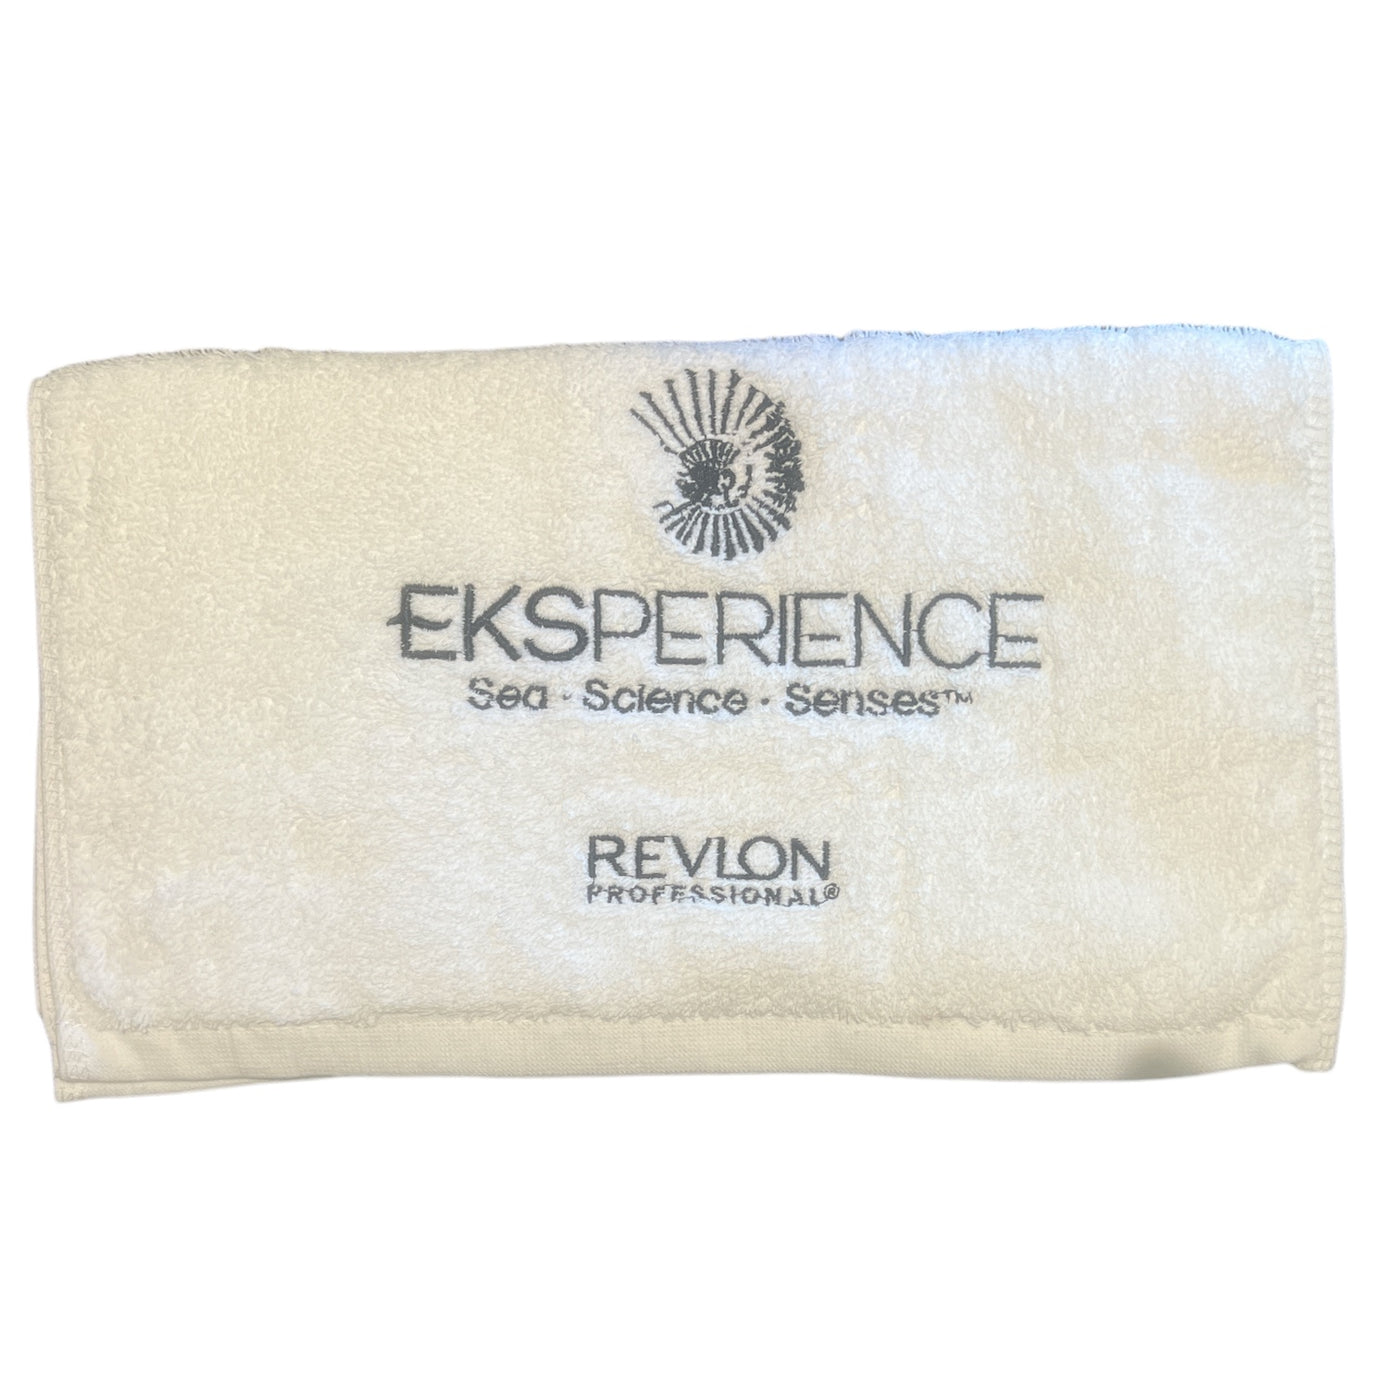 Revlon EKSPEREIENCE salon towel.